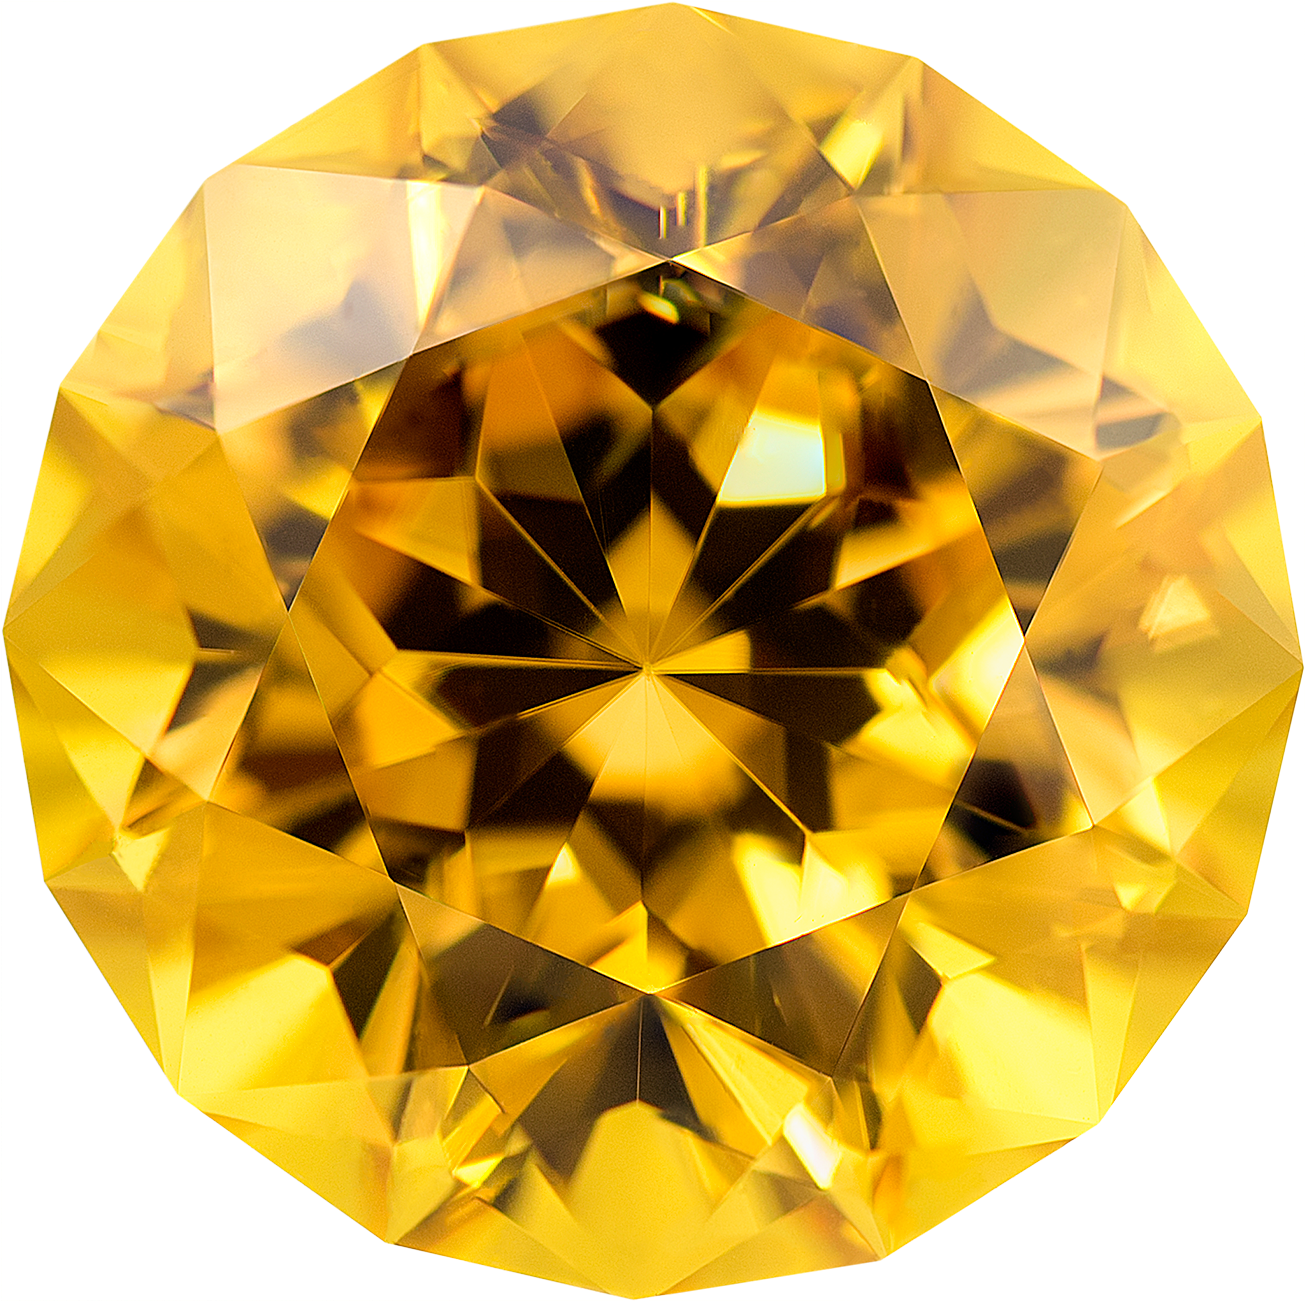 A Close Up Of A Diamond